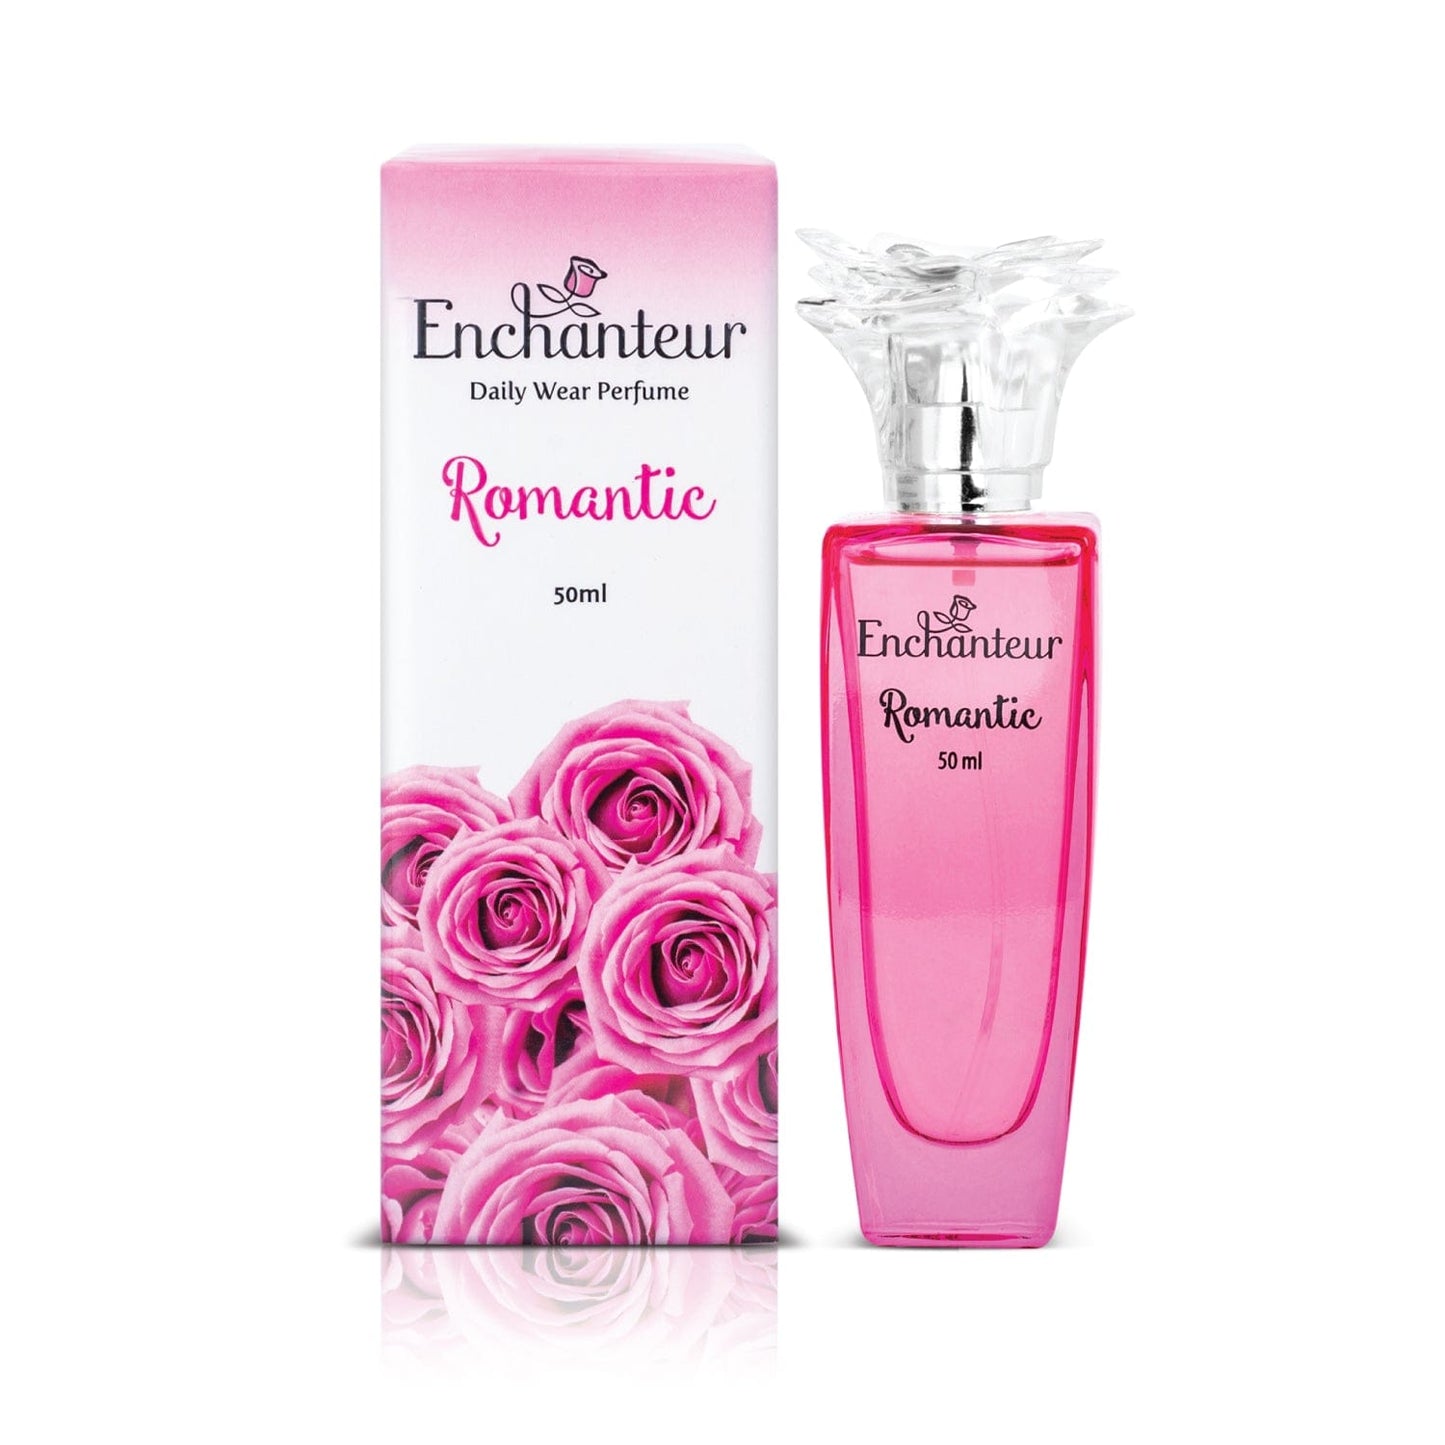 Enchanteur Romantic Daily wear Perfume for Women, 50ml